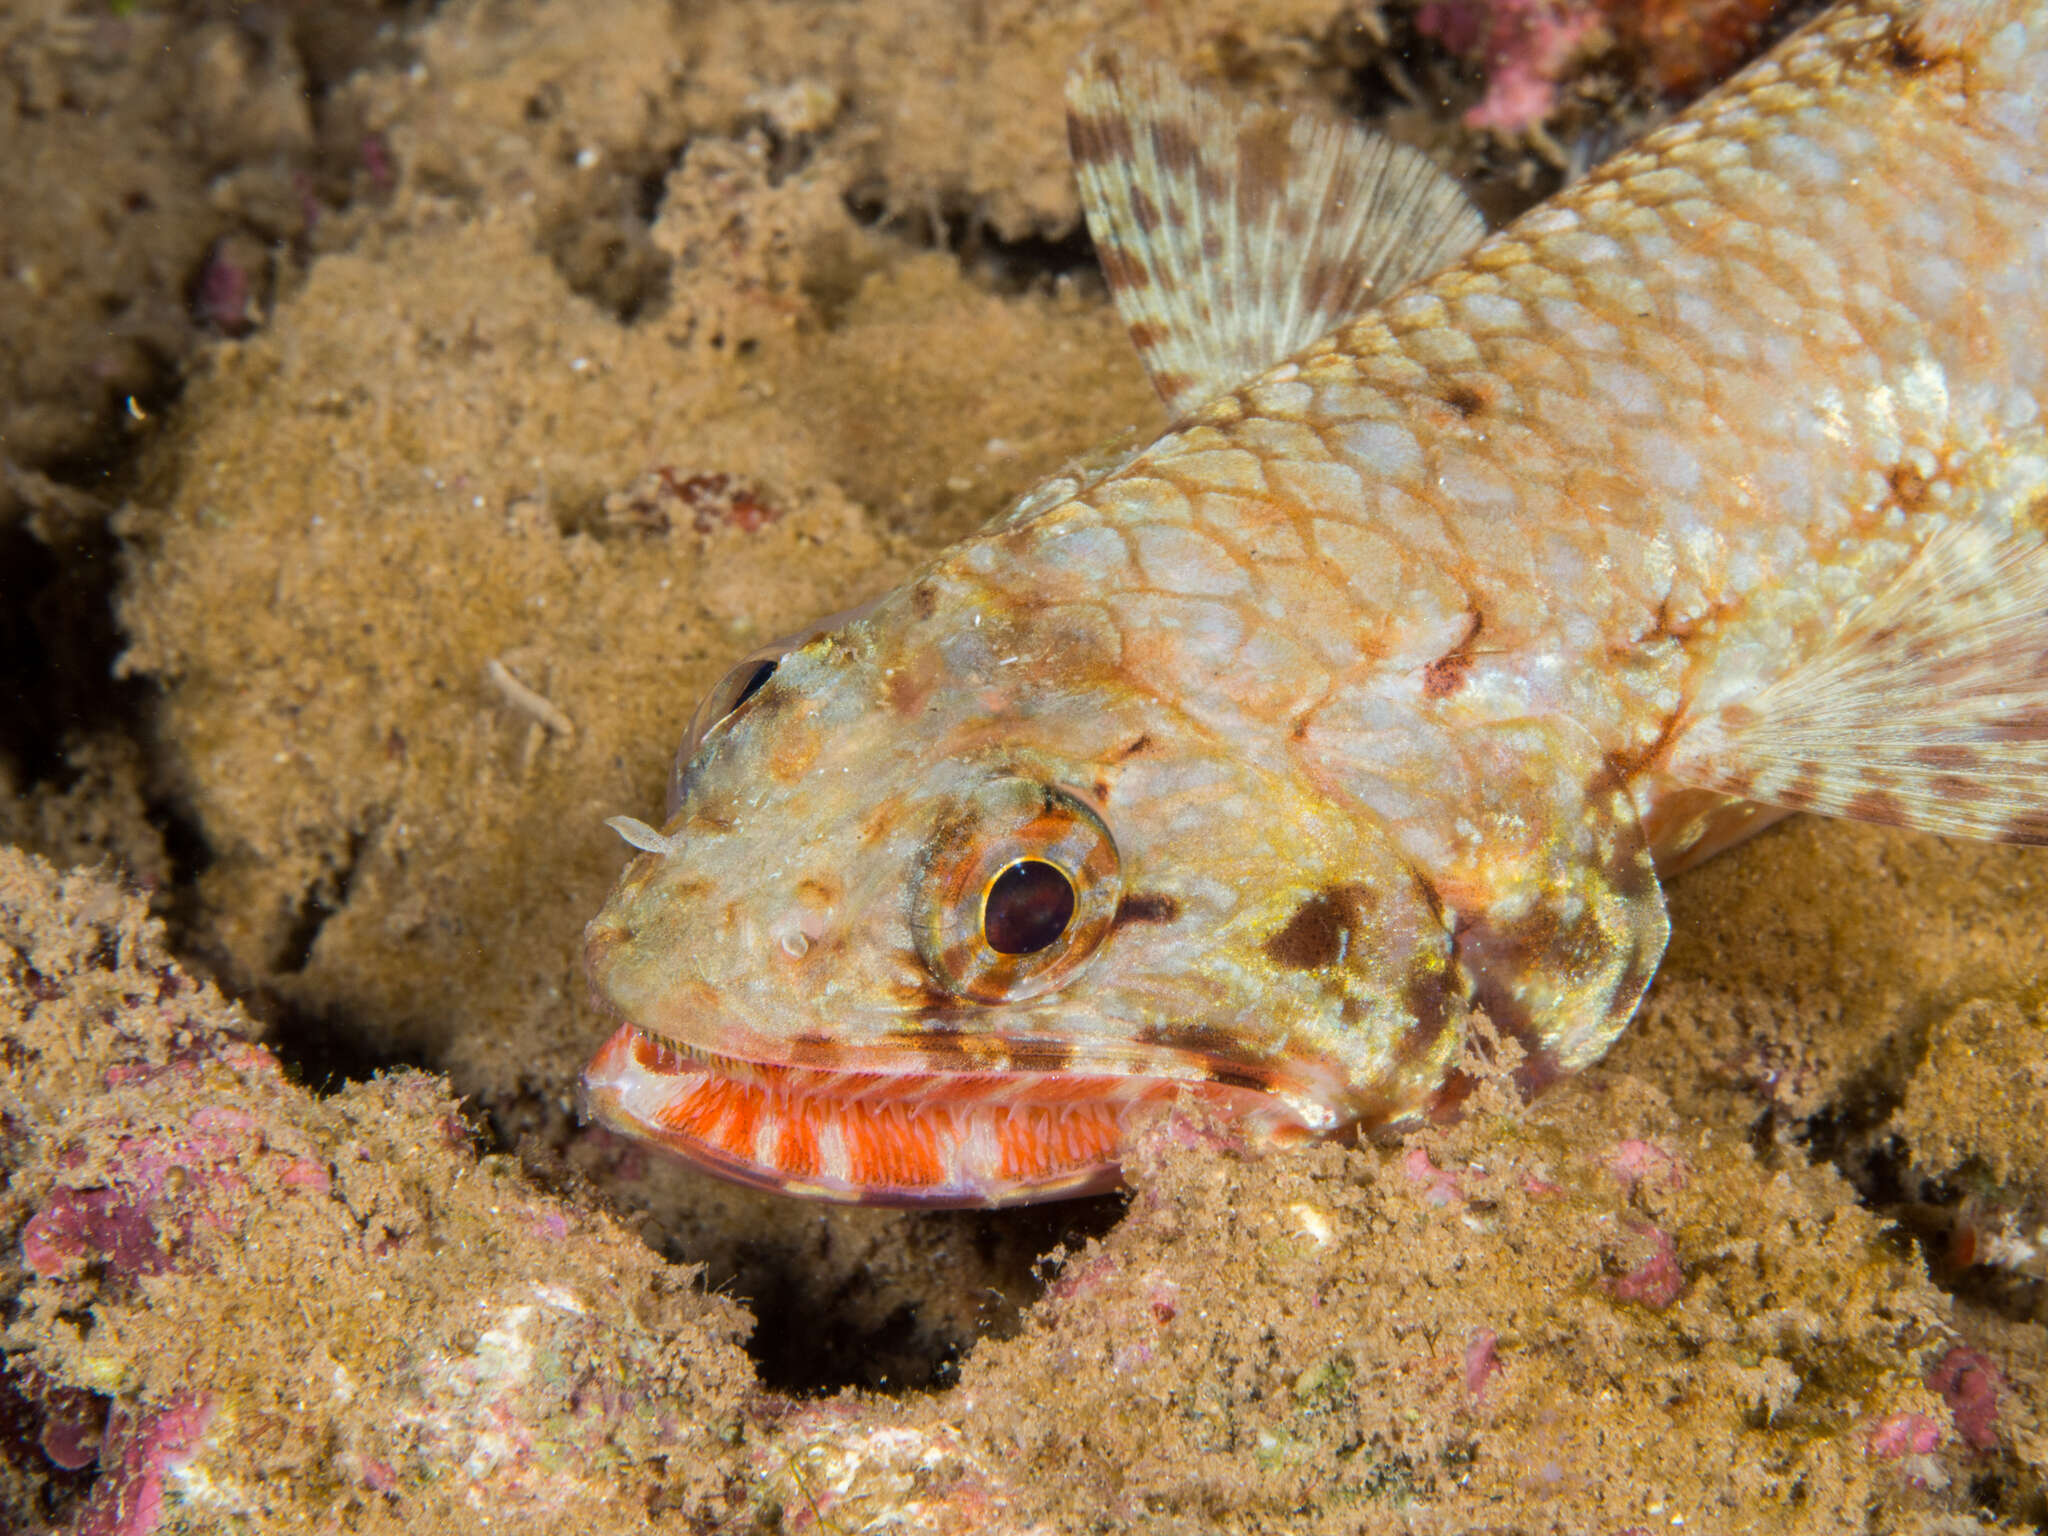 Image of Orangemouth lizardfish